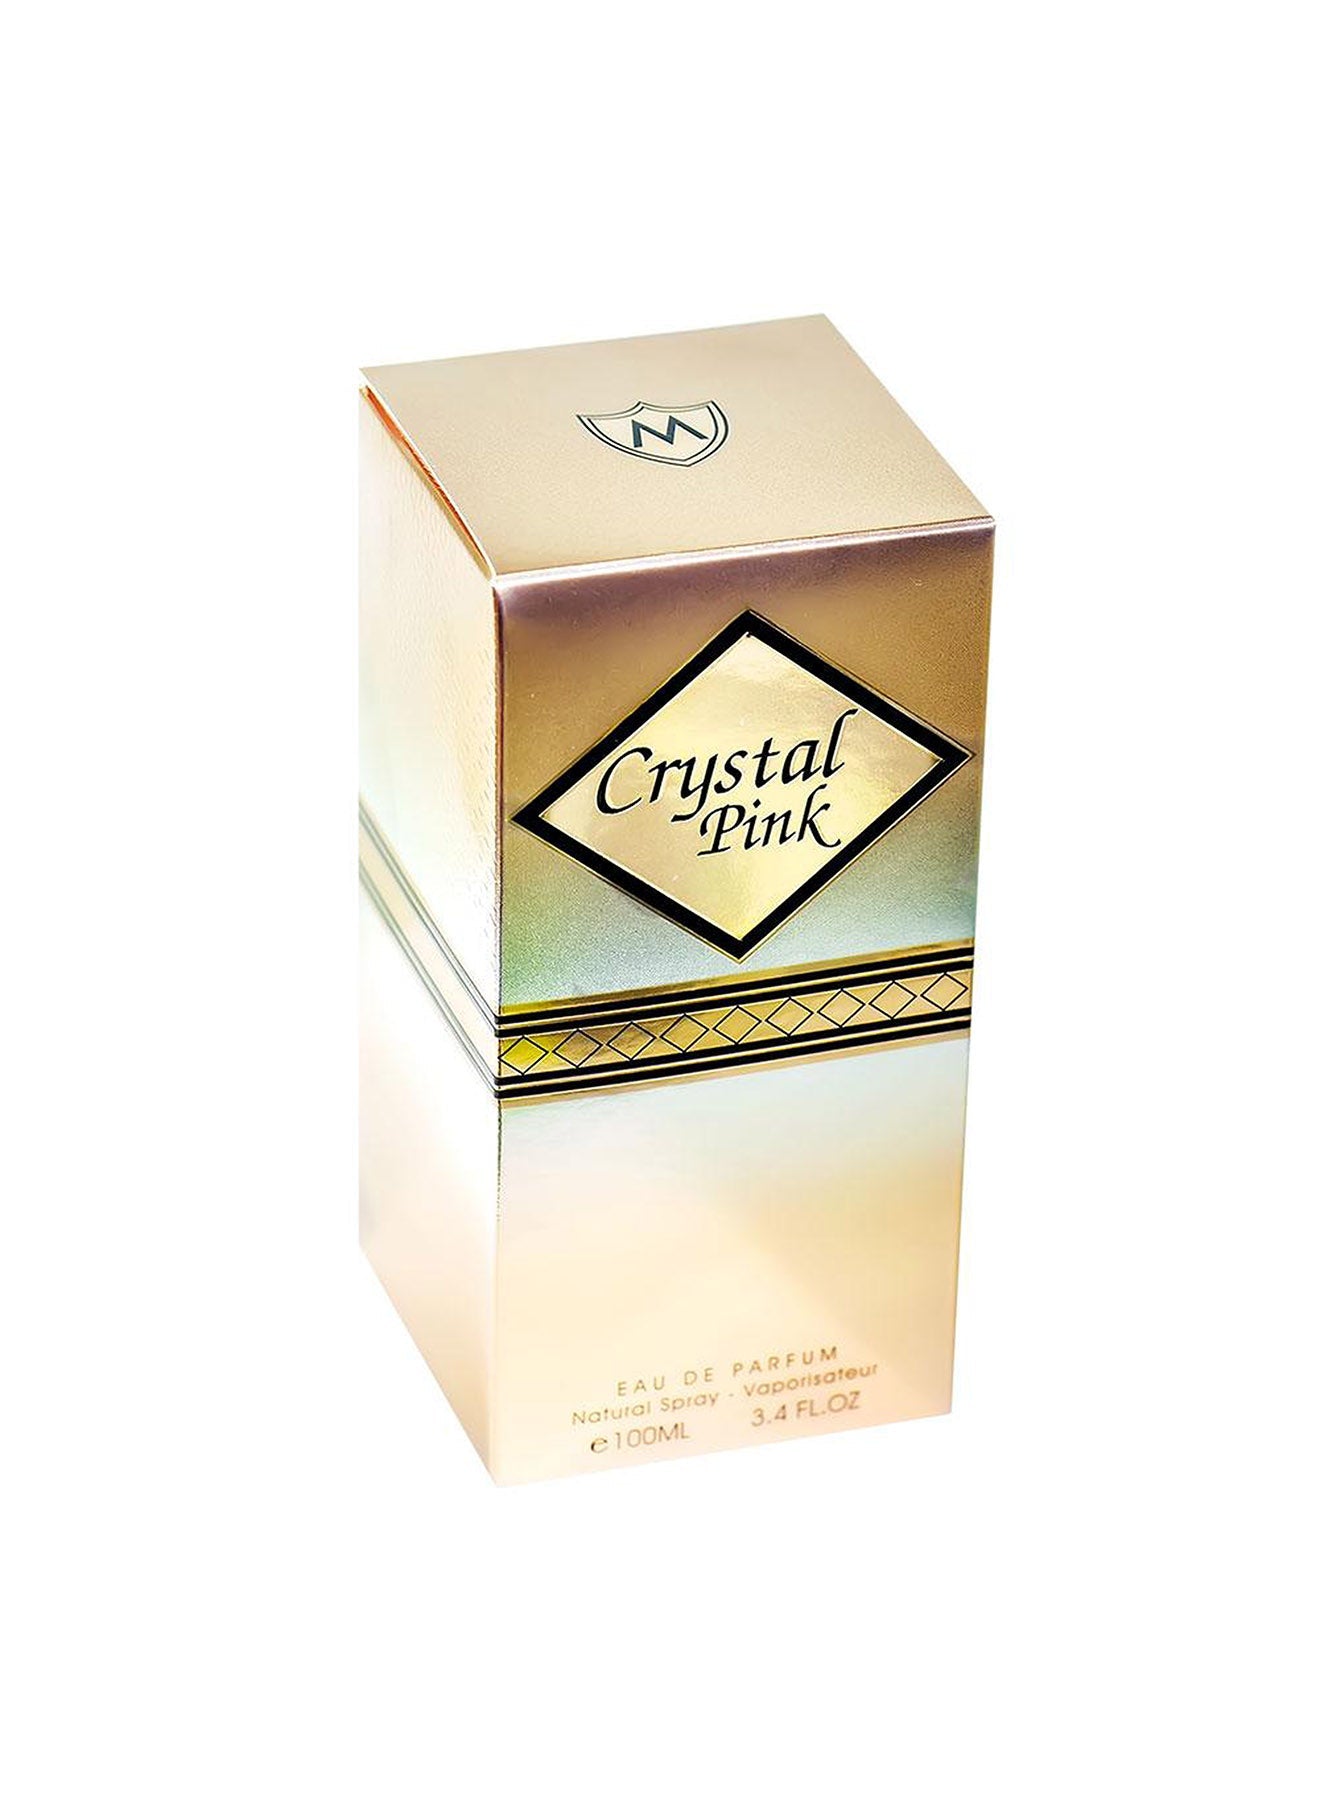 Crystal Pink Eau De Parfum 100ml Value Pack of 12 